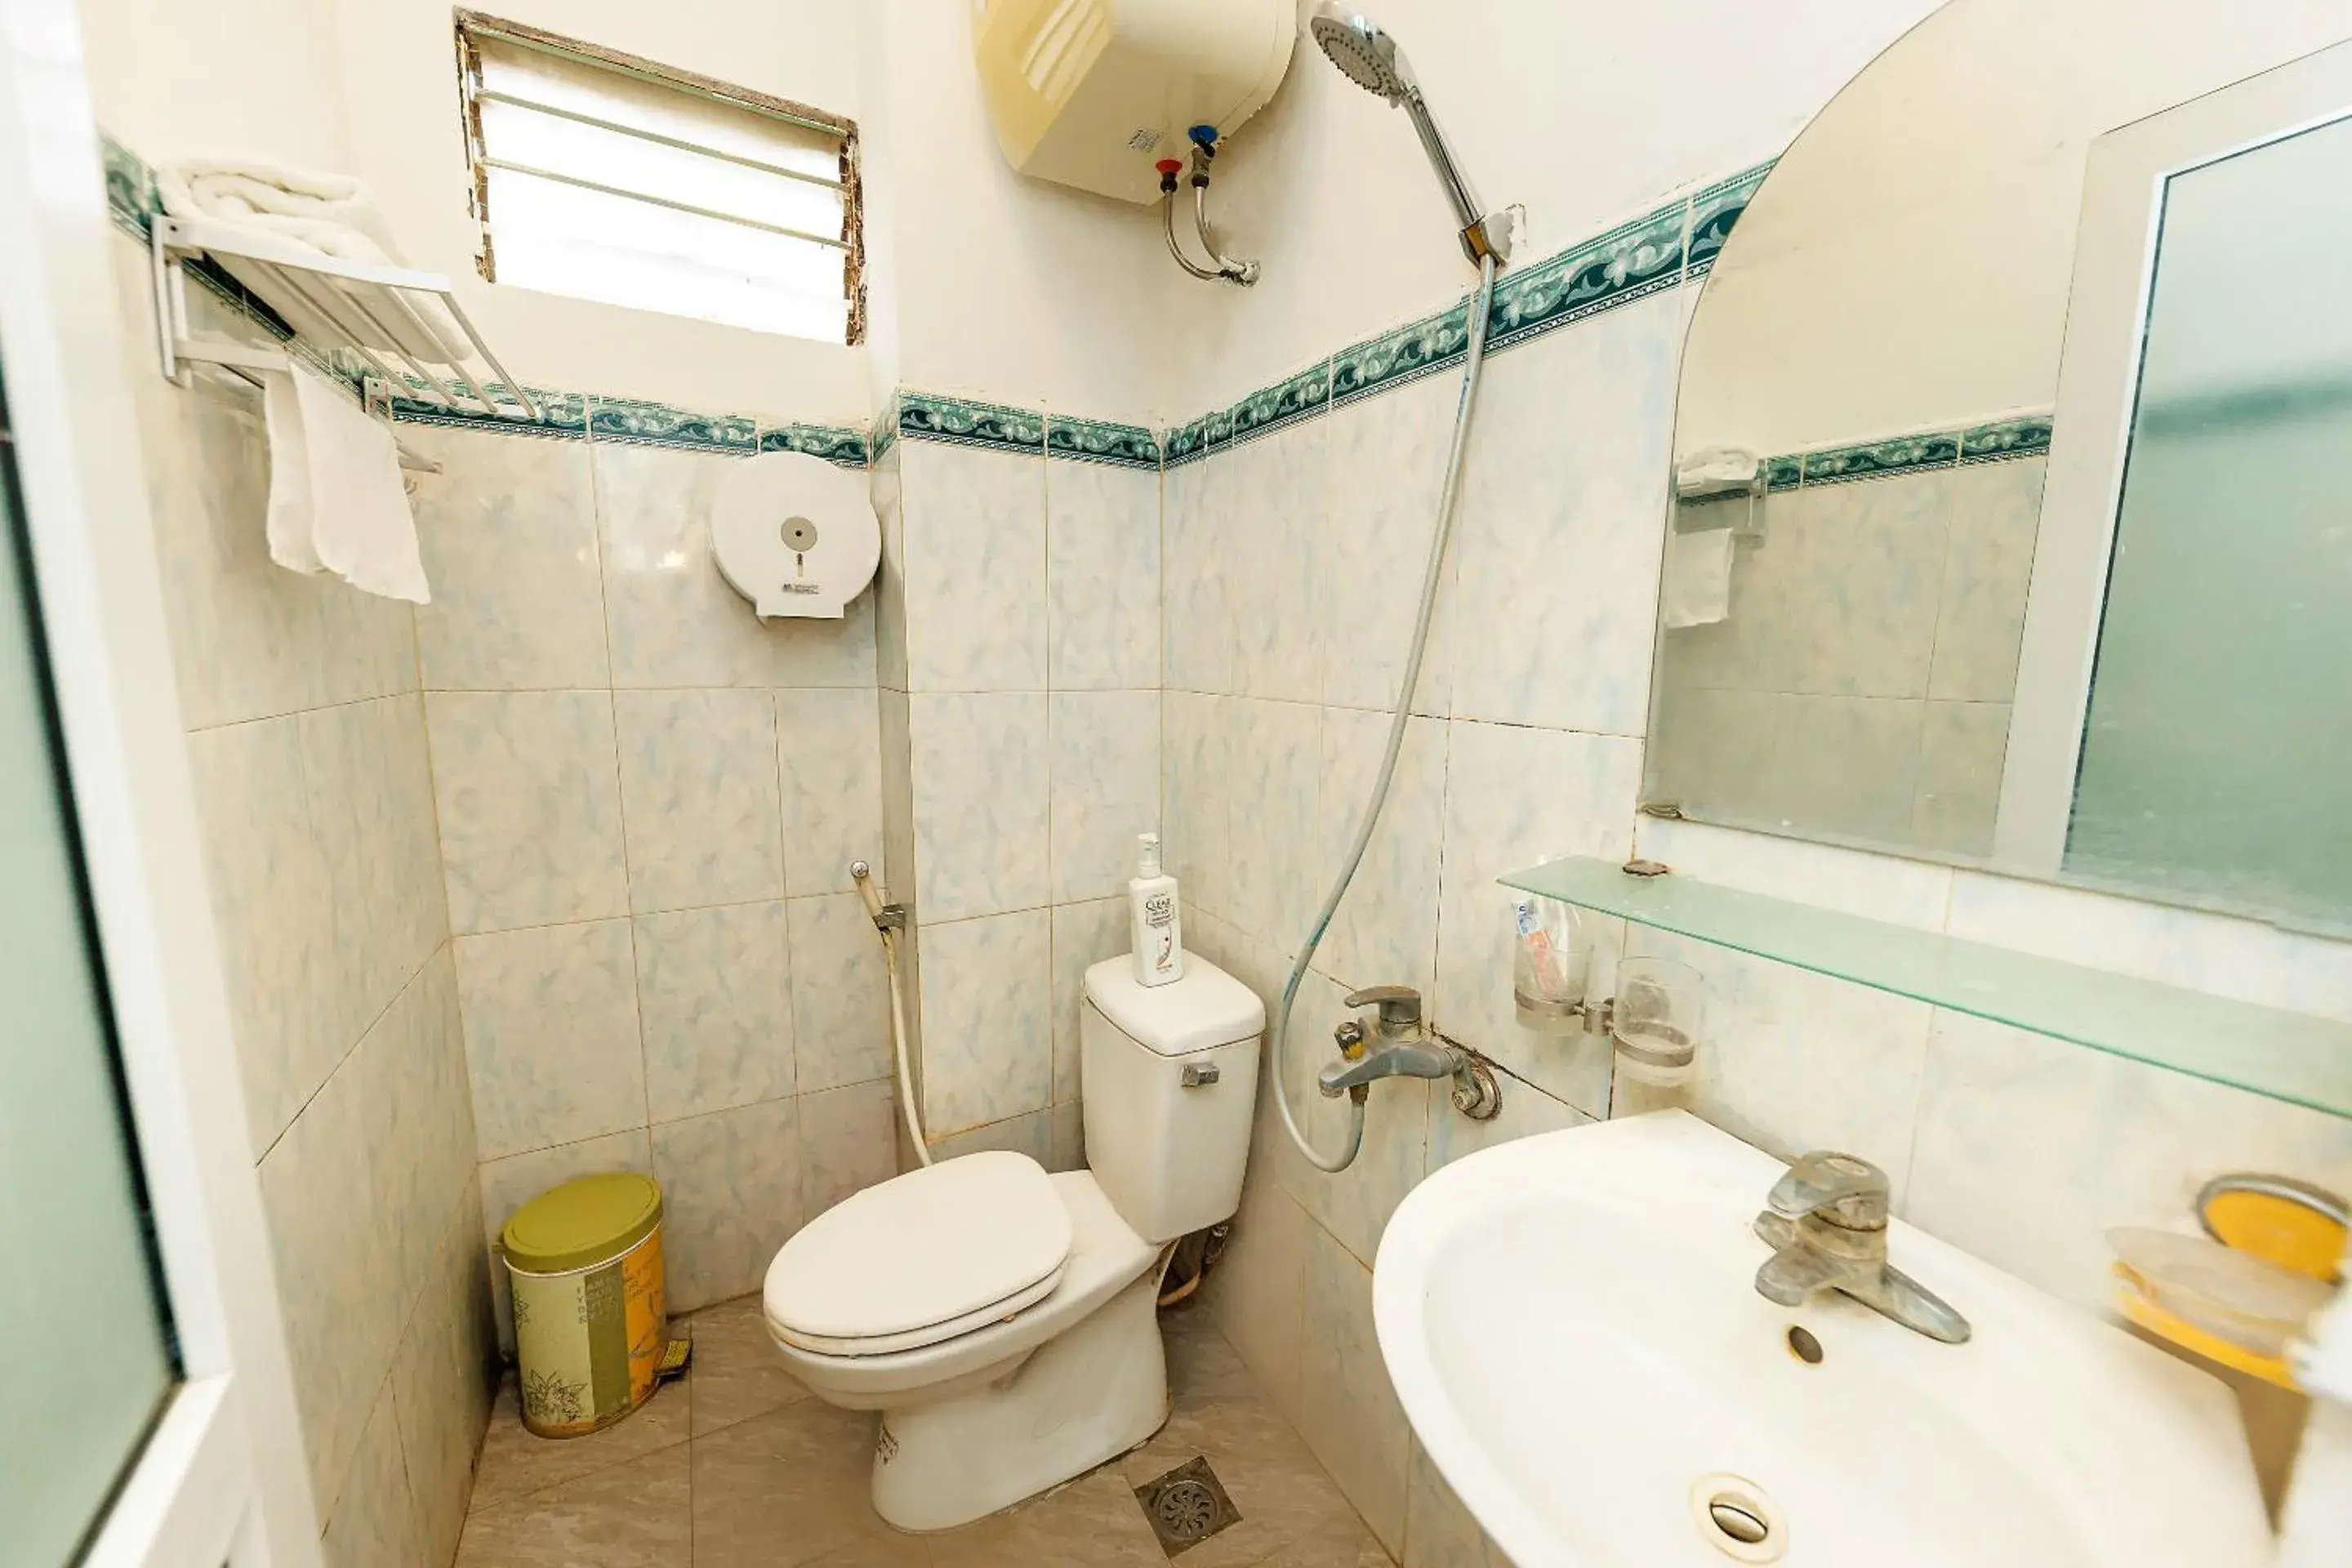 Bathroom in Binh Minh Hotel - 84 Ngoc Khanh